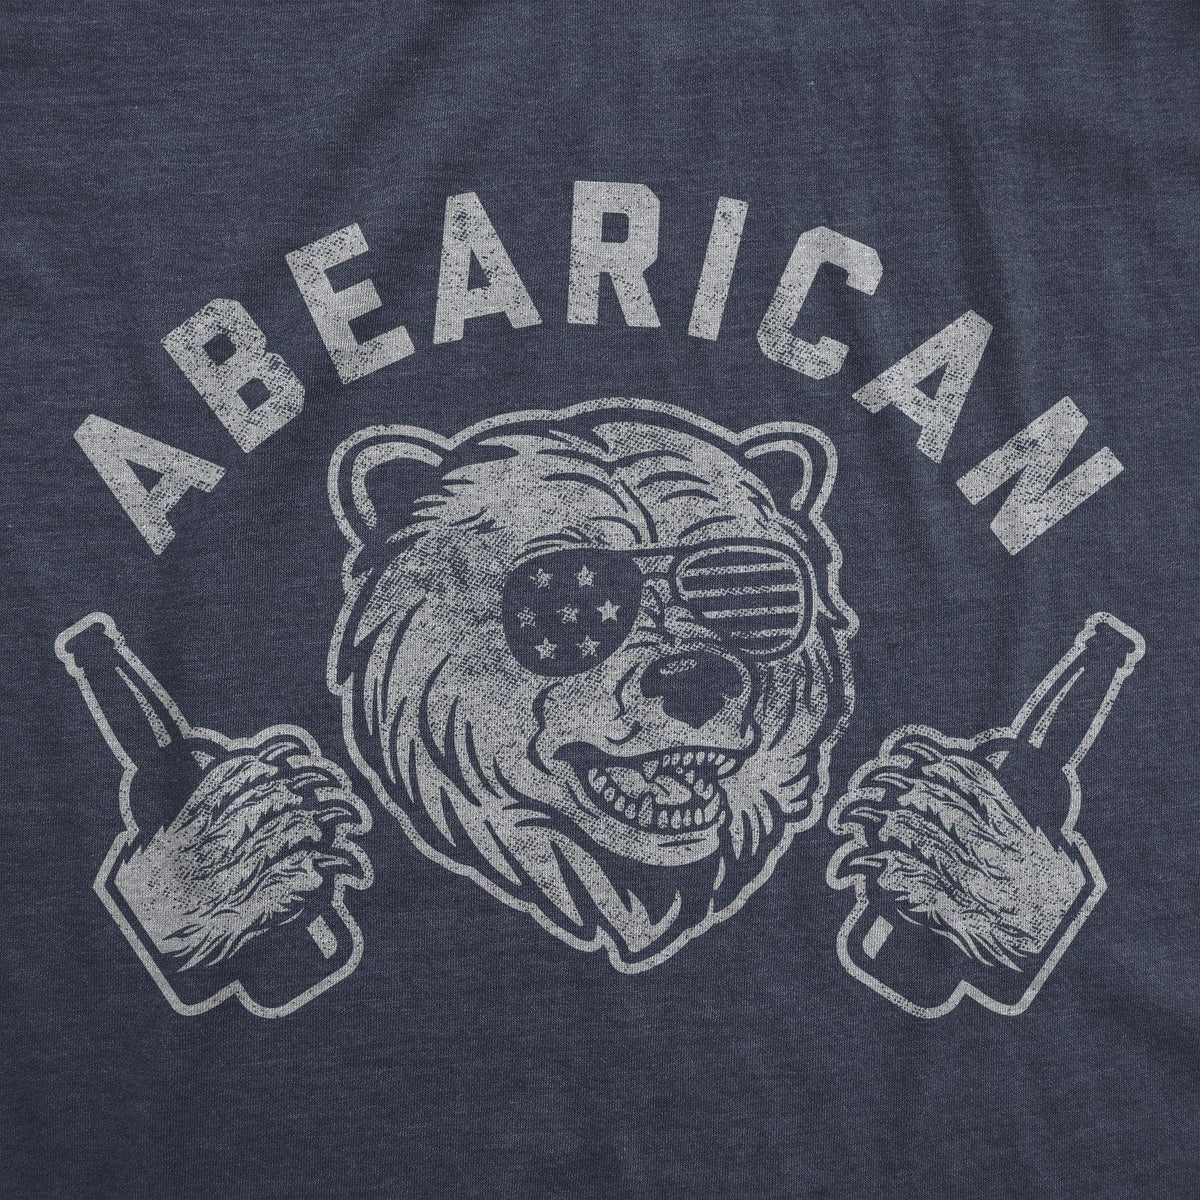 Abearican Men&#39;s Tshirt - Crazy Dog T-Shirts